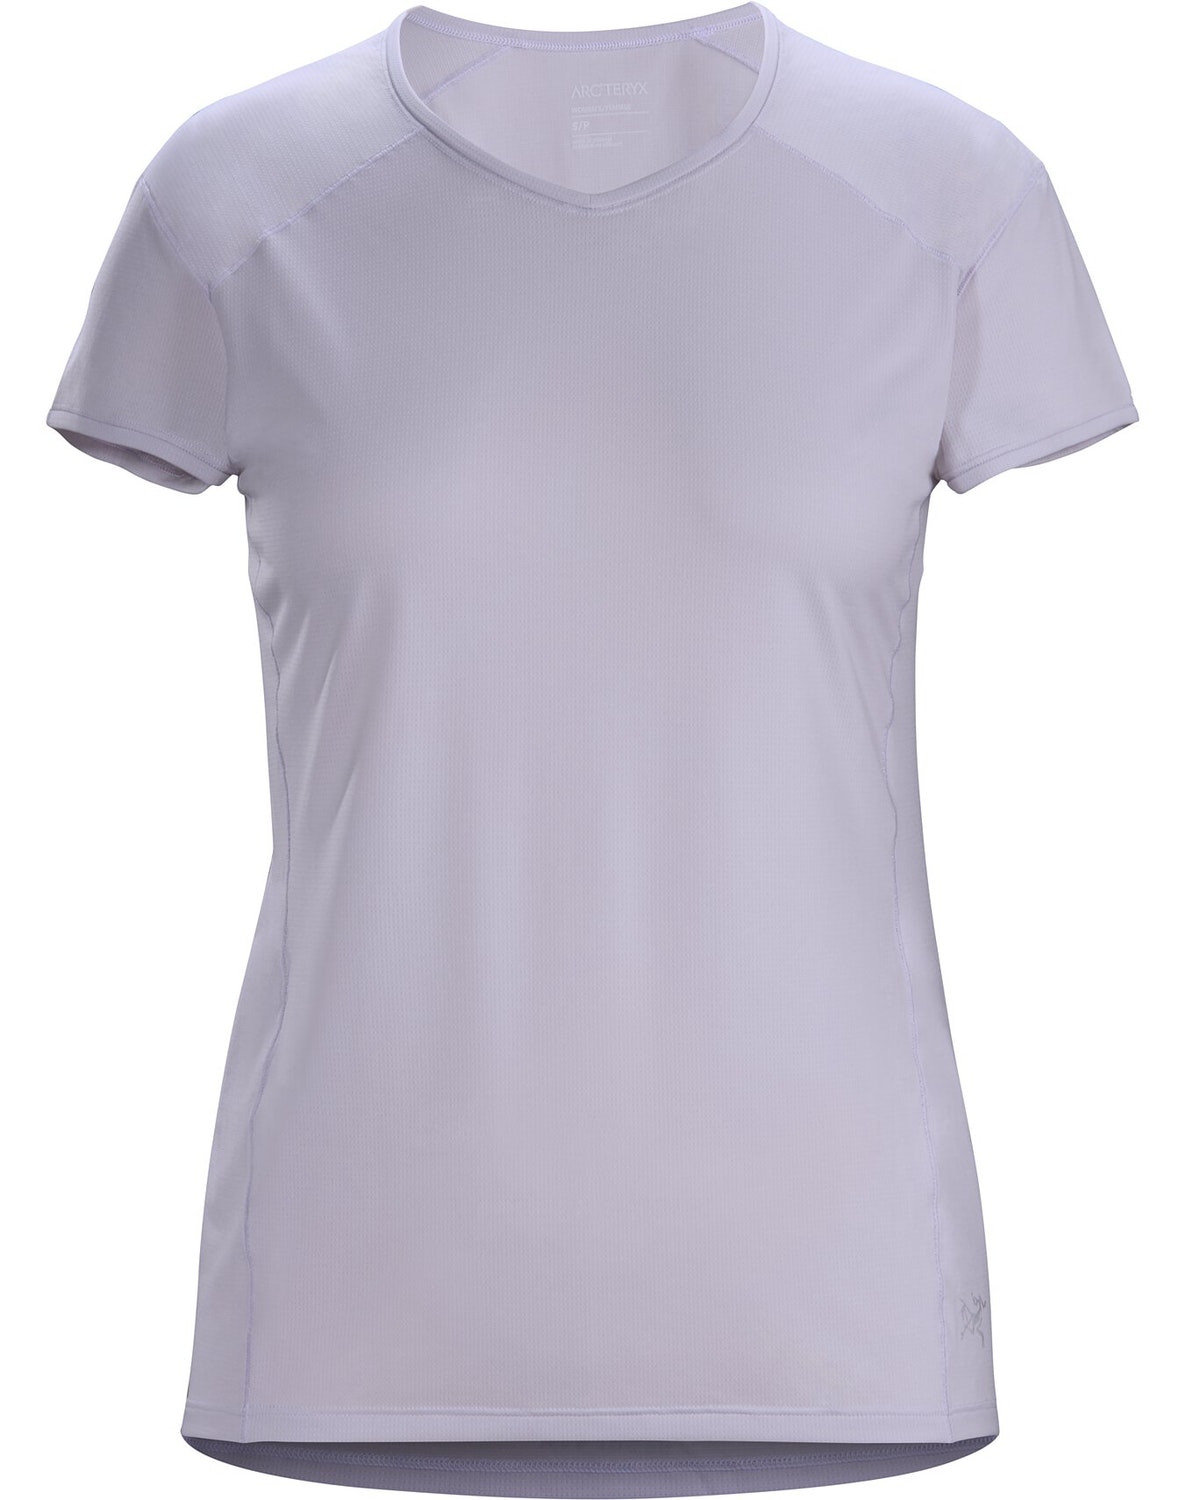 T-shirt Arc'teryx Kapta Donna Viola Chiaro - IT-13557914